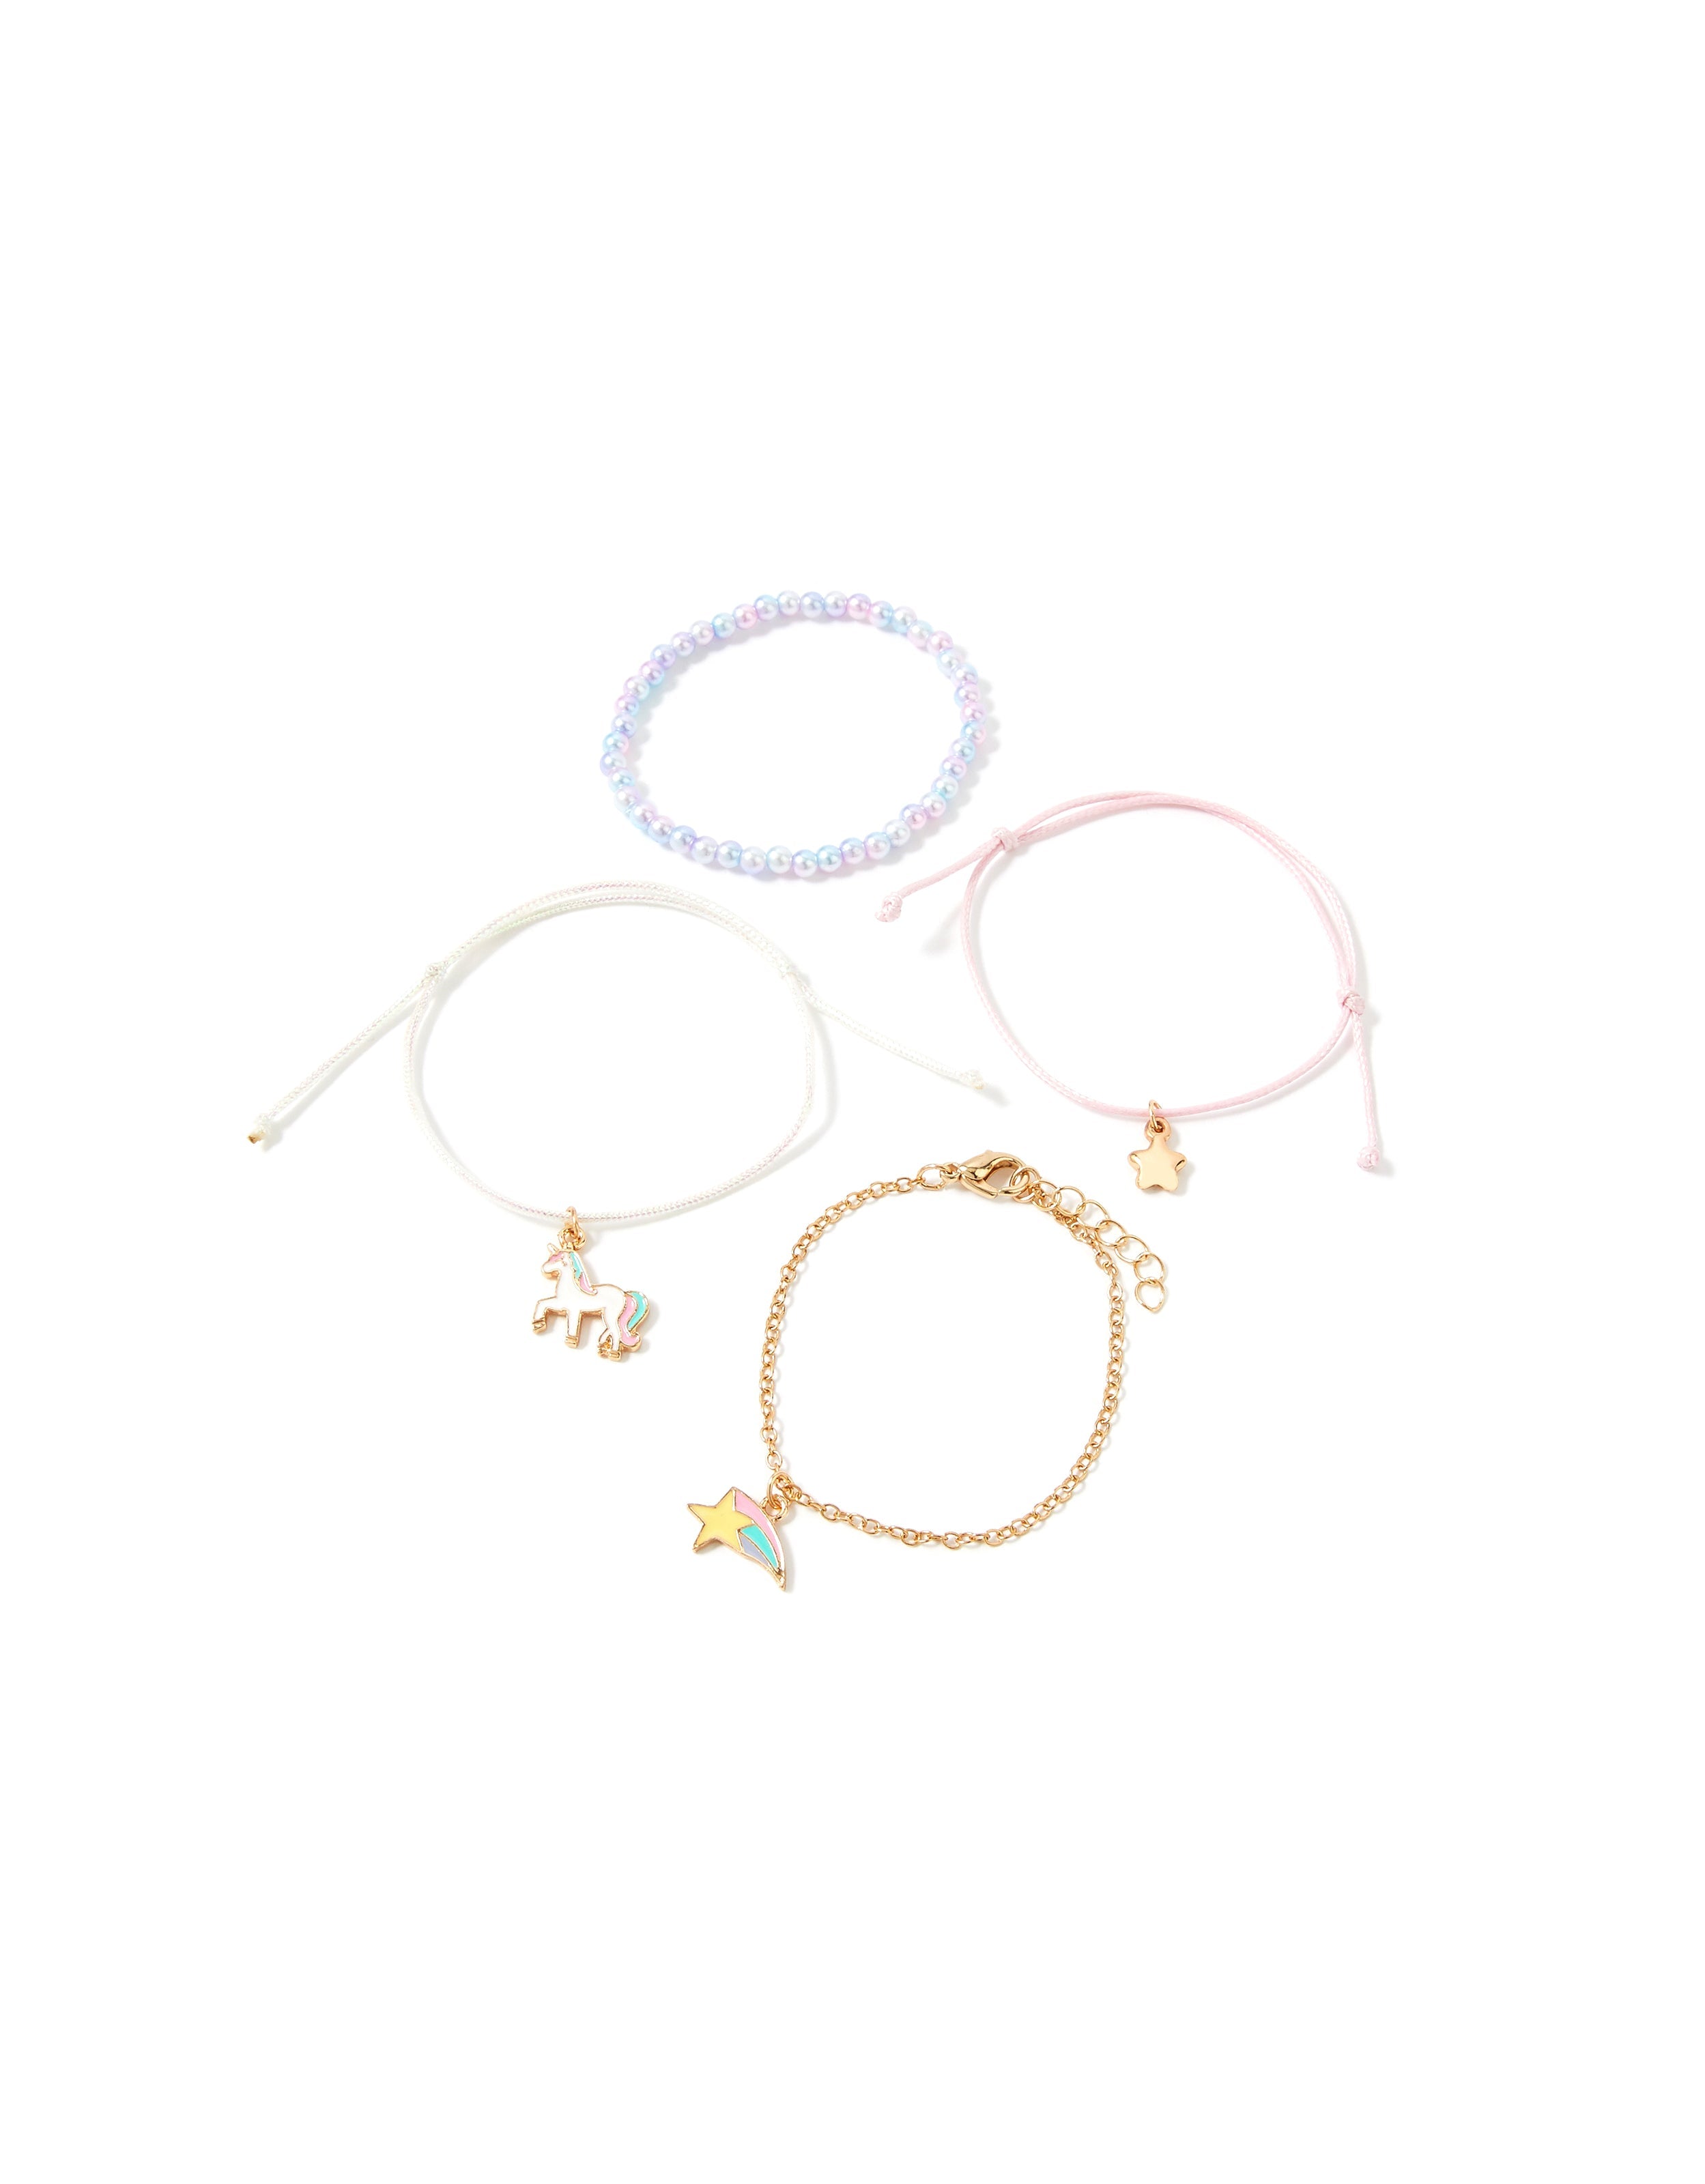 Buy Sister Bracelets for 4,bridesmaid Bracelet,4 Sister Bracelet,best  Friend Bracelet for 4,bff Bracelet for 4,matching Bracelets for 4 Online in  India - Etsy